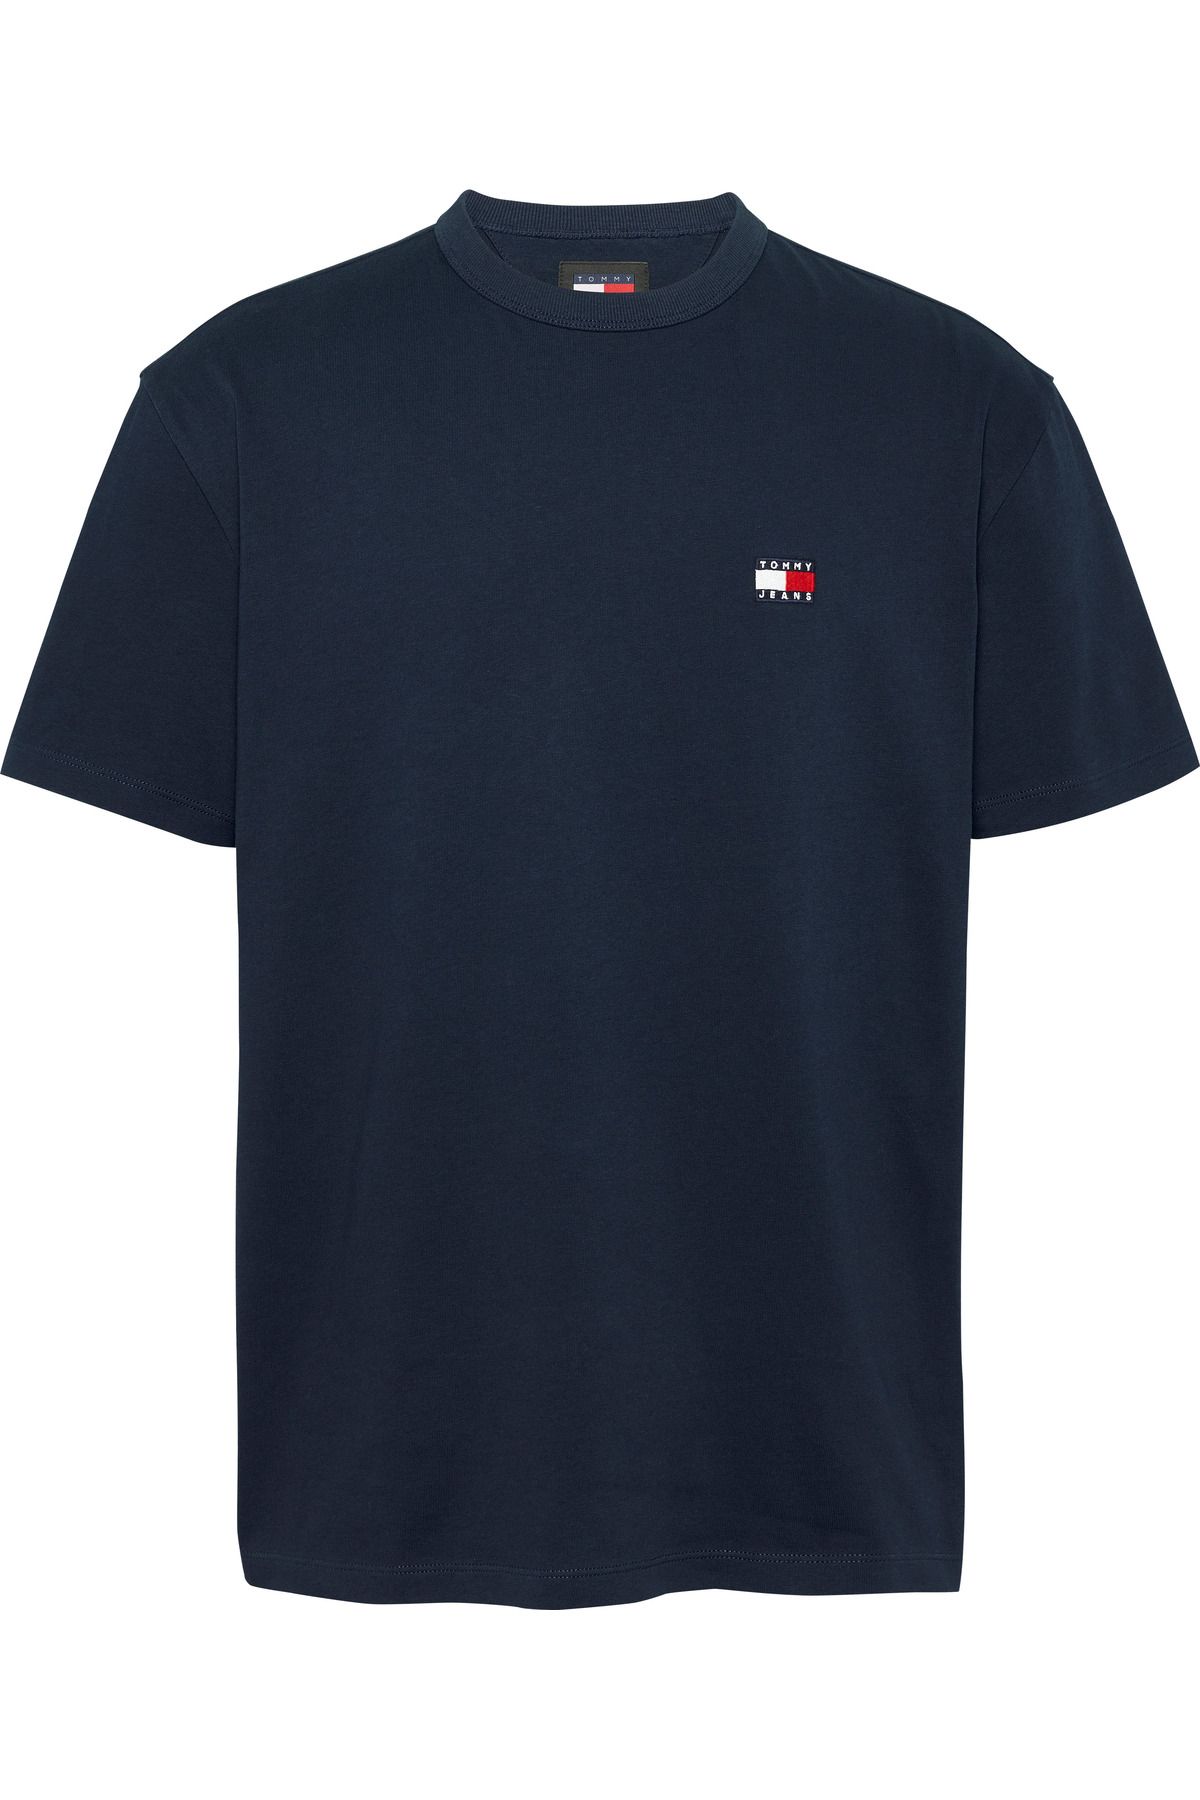 Tommy Hilfiger Erkek Marka Logolu Organik Pamuklu Günlük Kullanıma Uygun Lacivert T-shirt Dm0dm17995-c1g